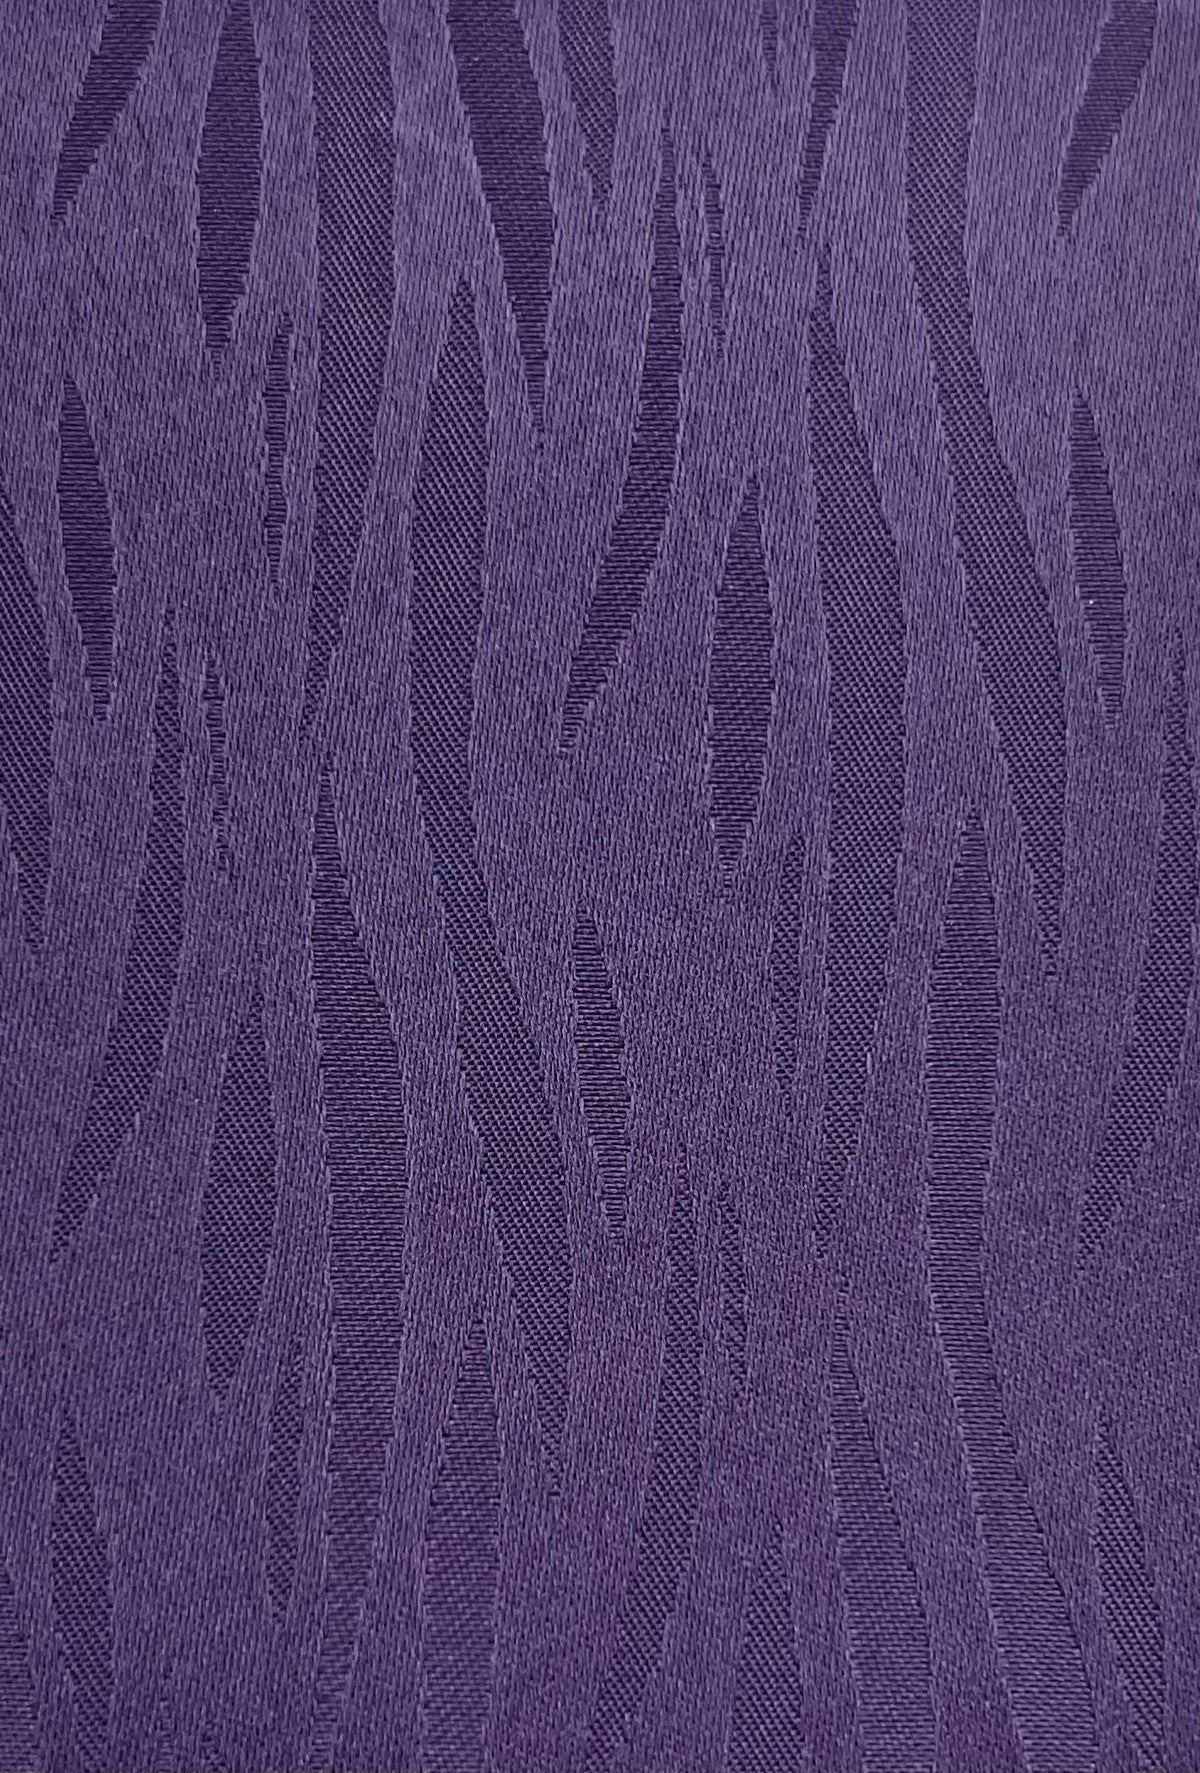 Oasis Purple1 Vertical Replacement Blind Slat